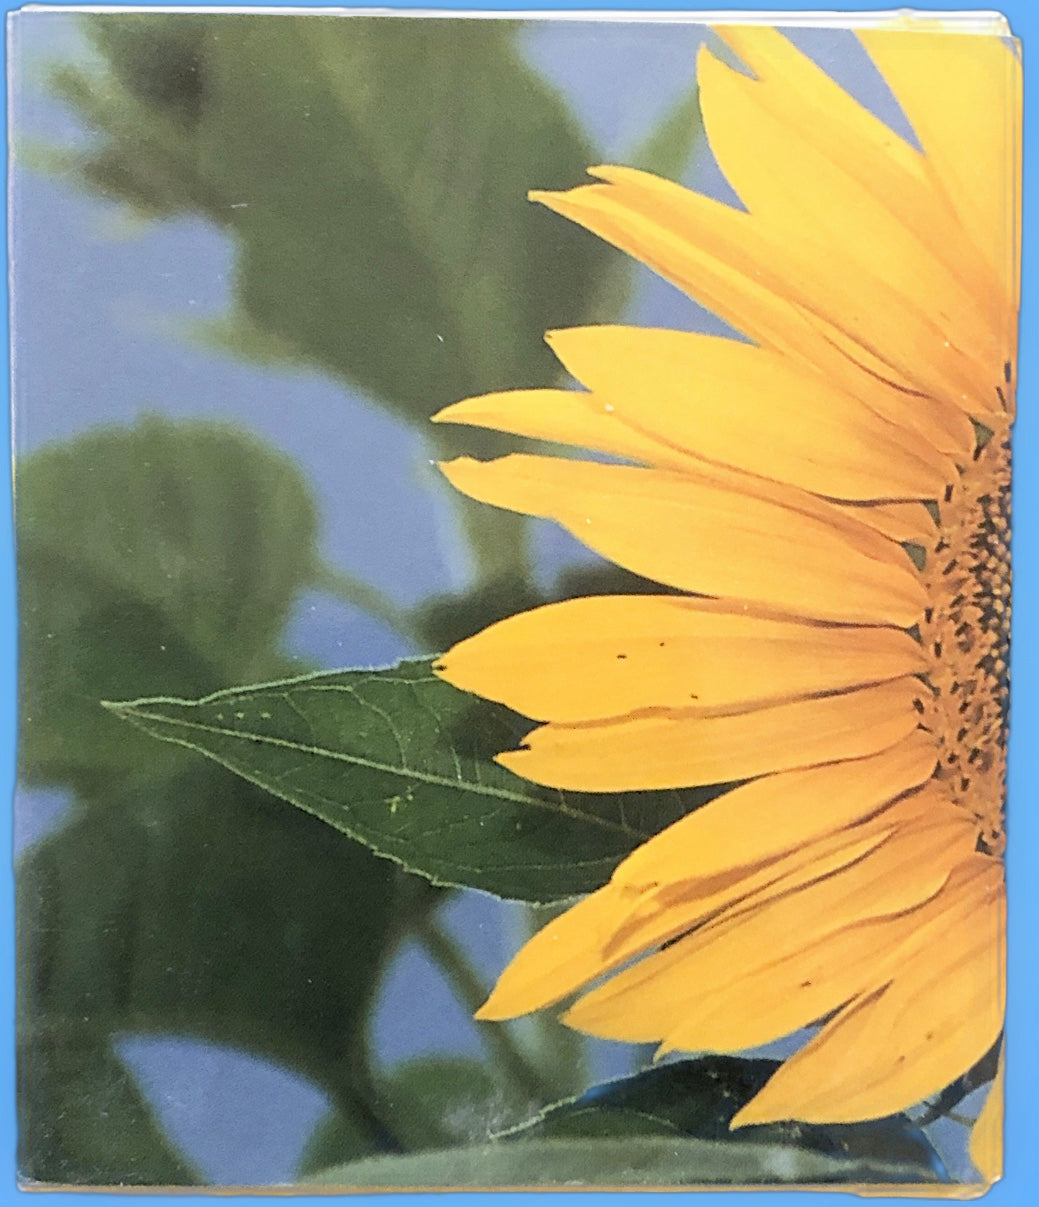 Sunflowers: A Little Treasury of Joy